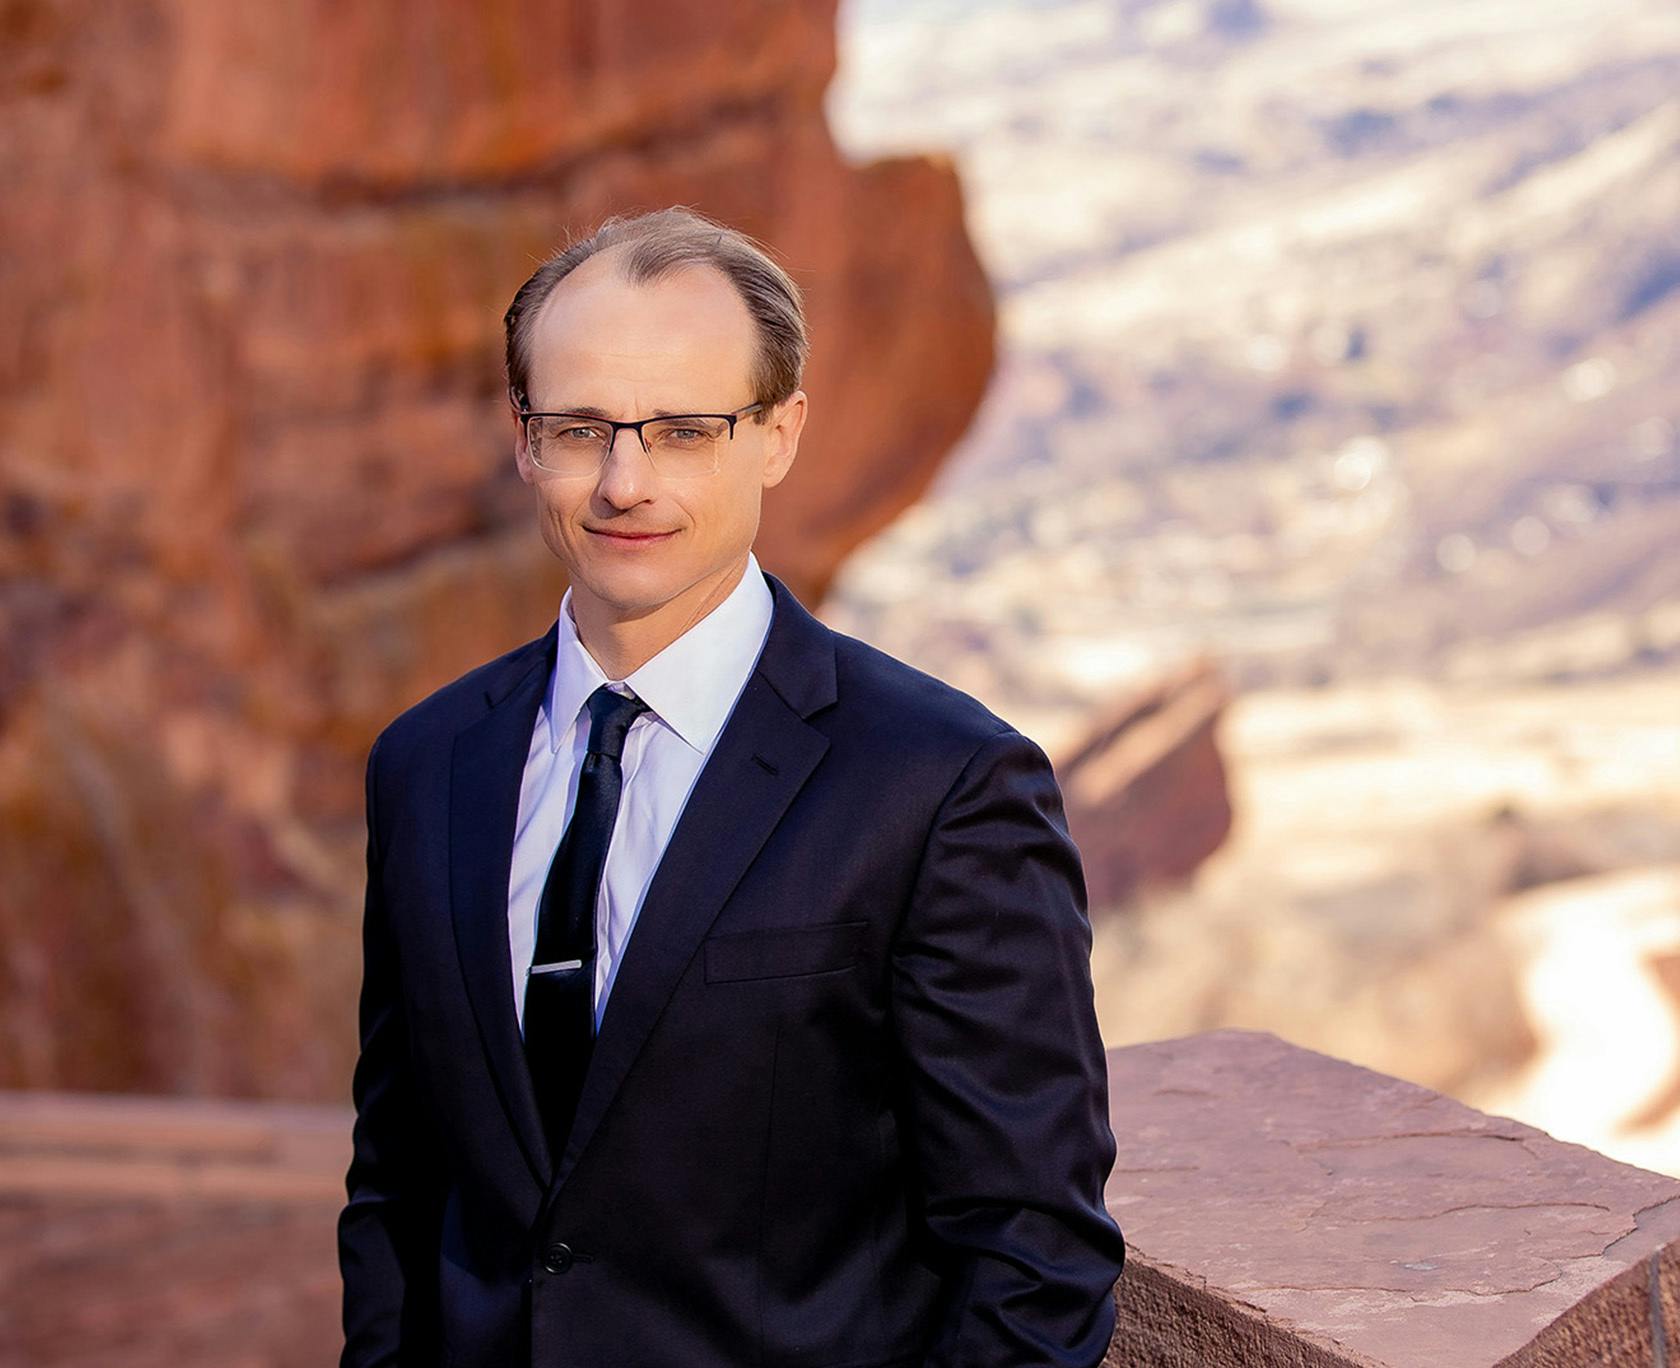 Dr. Wojciech Przylecki in a suit and tie standing on a ledge